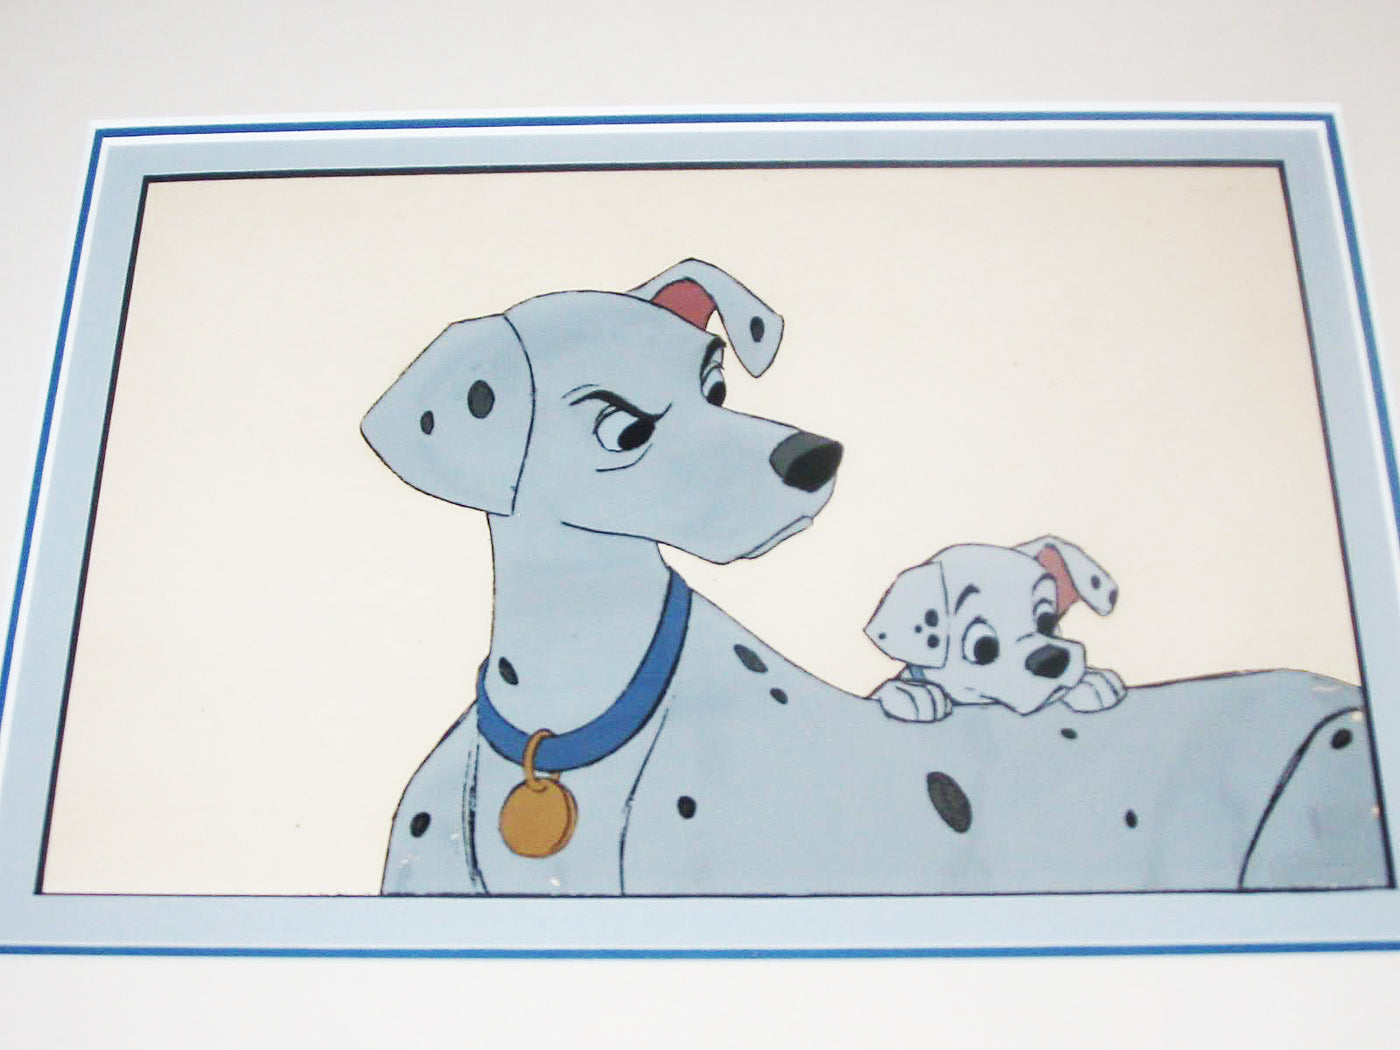 Original Walt Disney Production Cel from 101 Dalmatians featuring puppy and Perdita